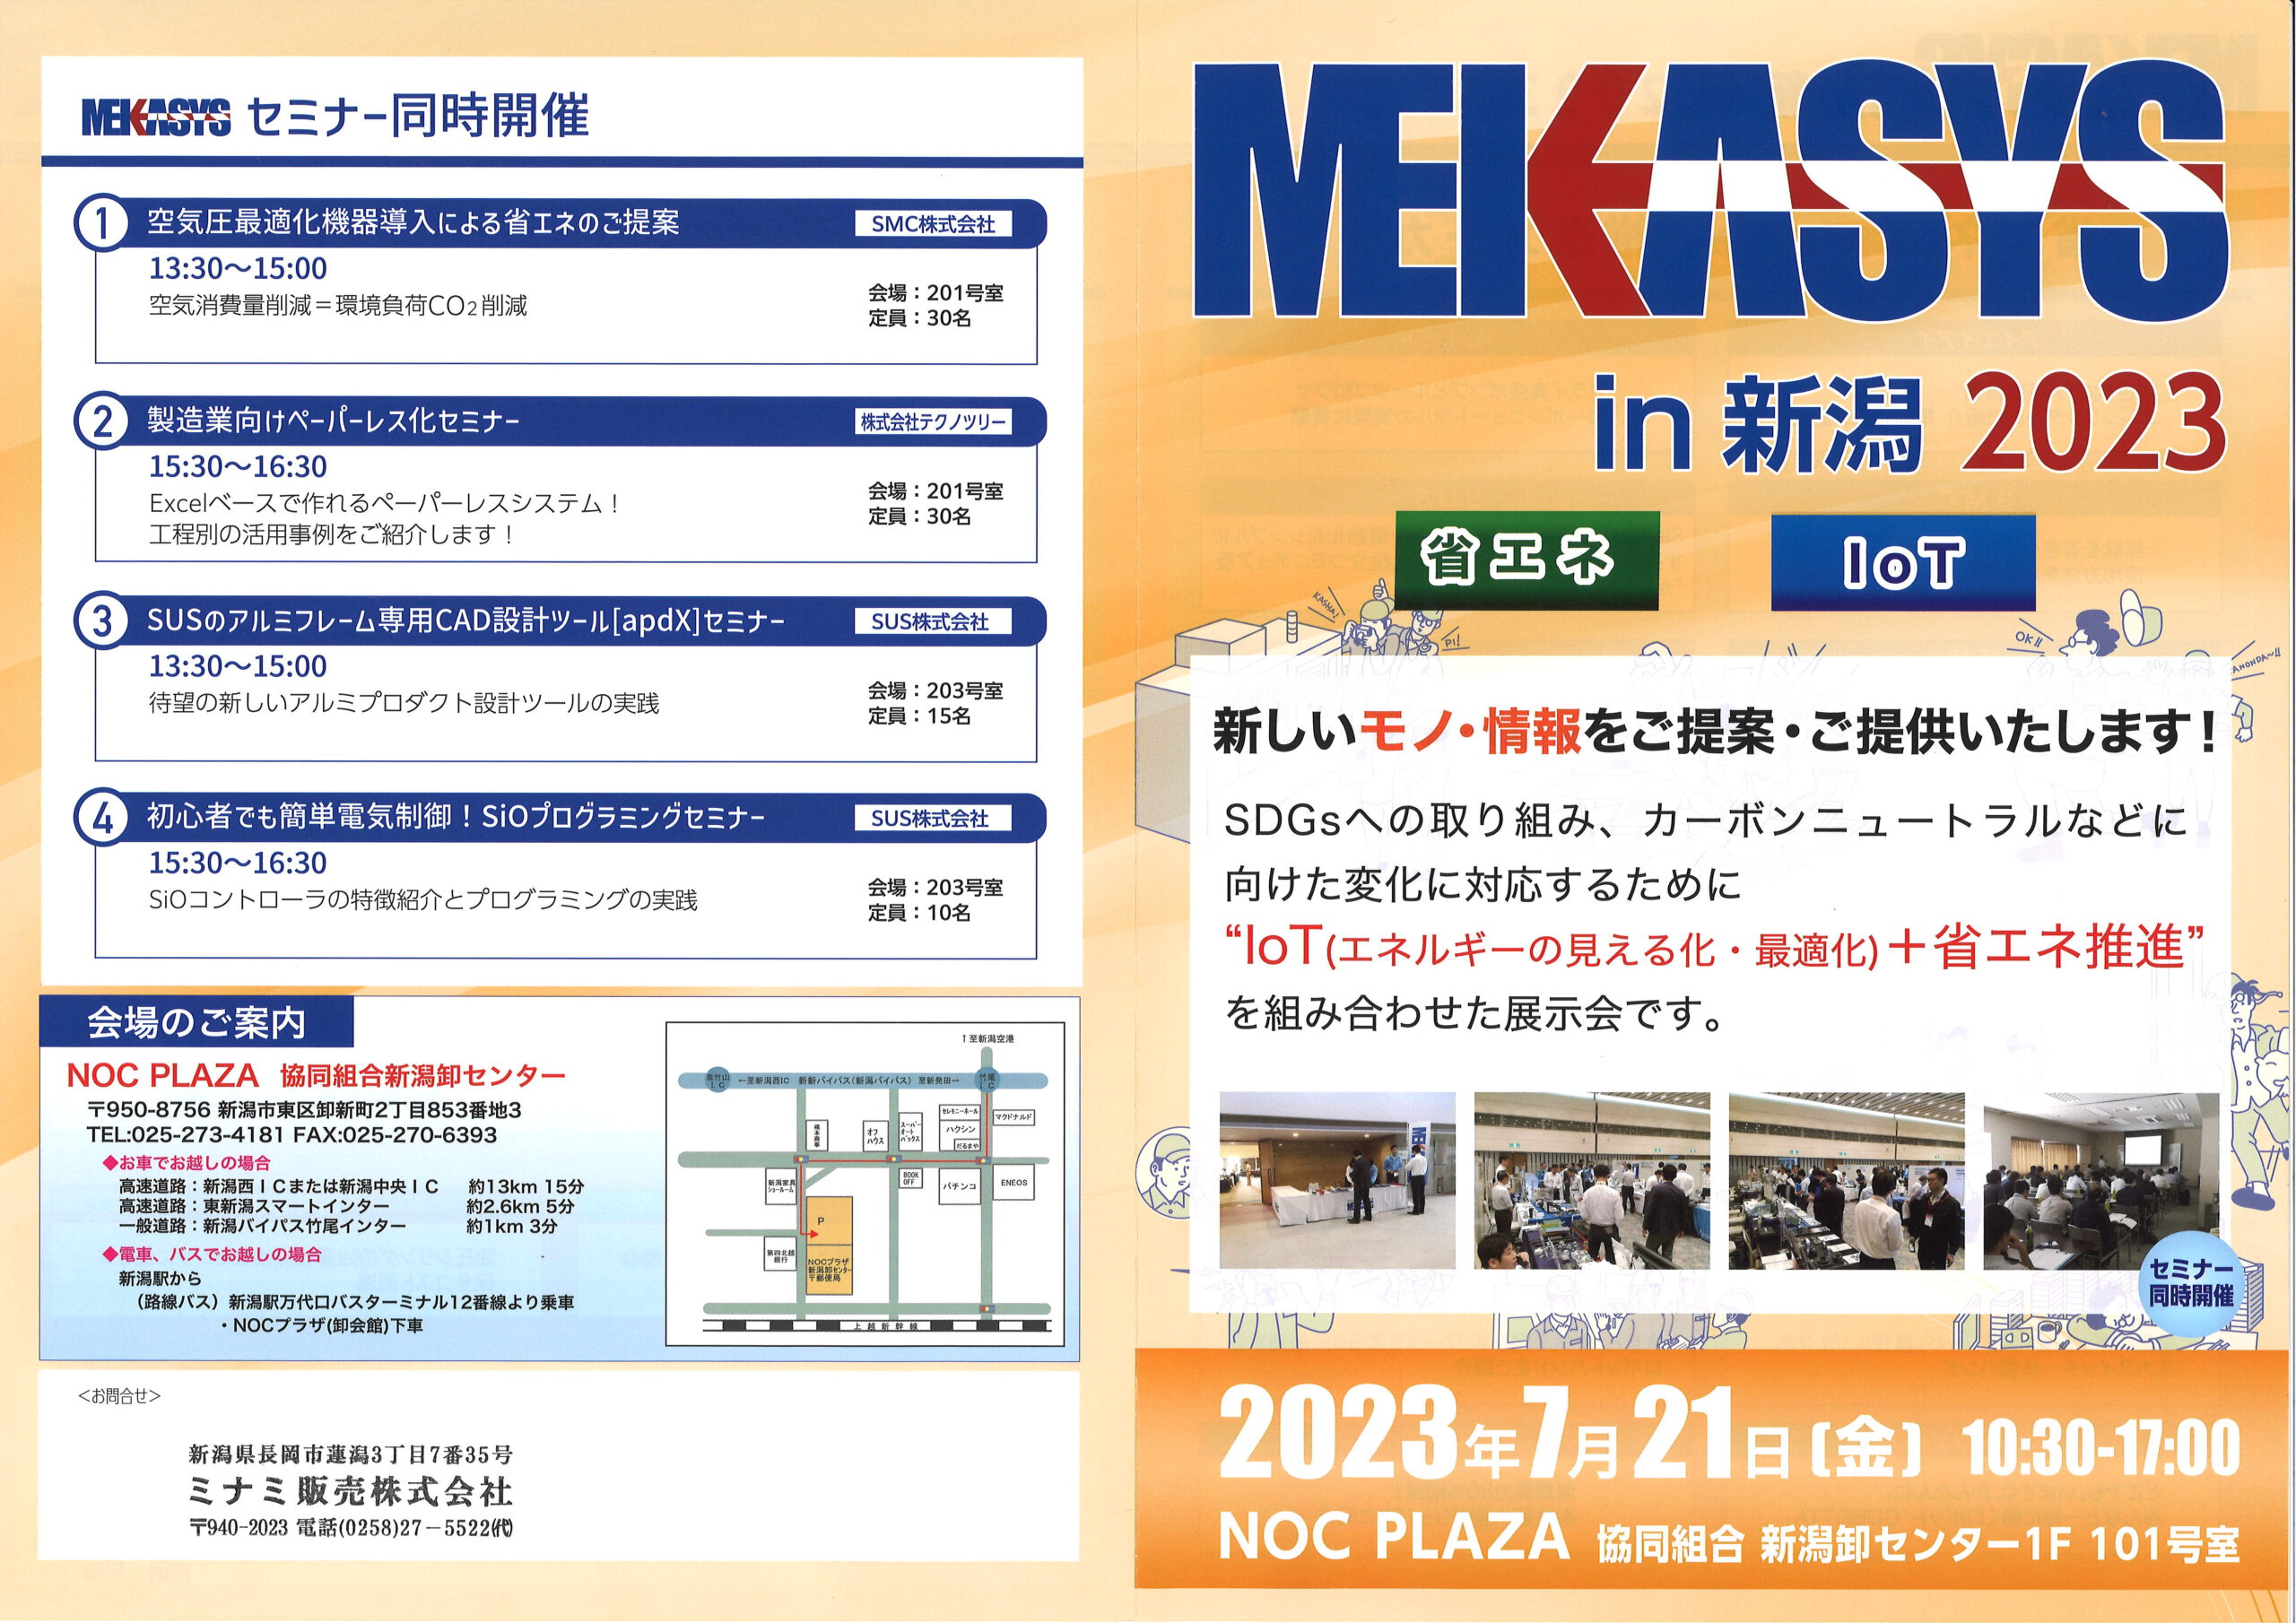 MEKASYS in 新潟 2023 展示会のご案内イメージ